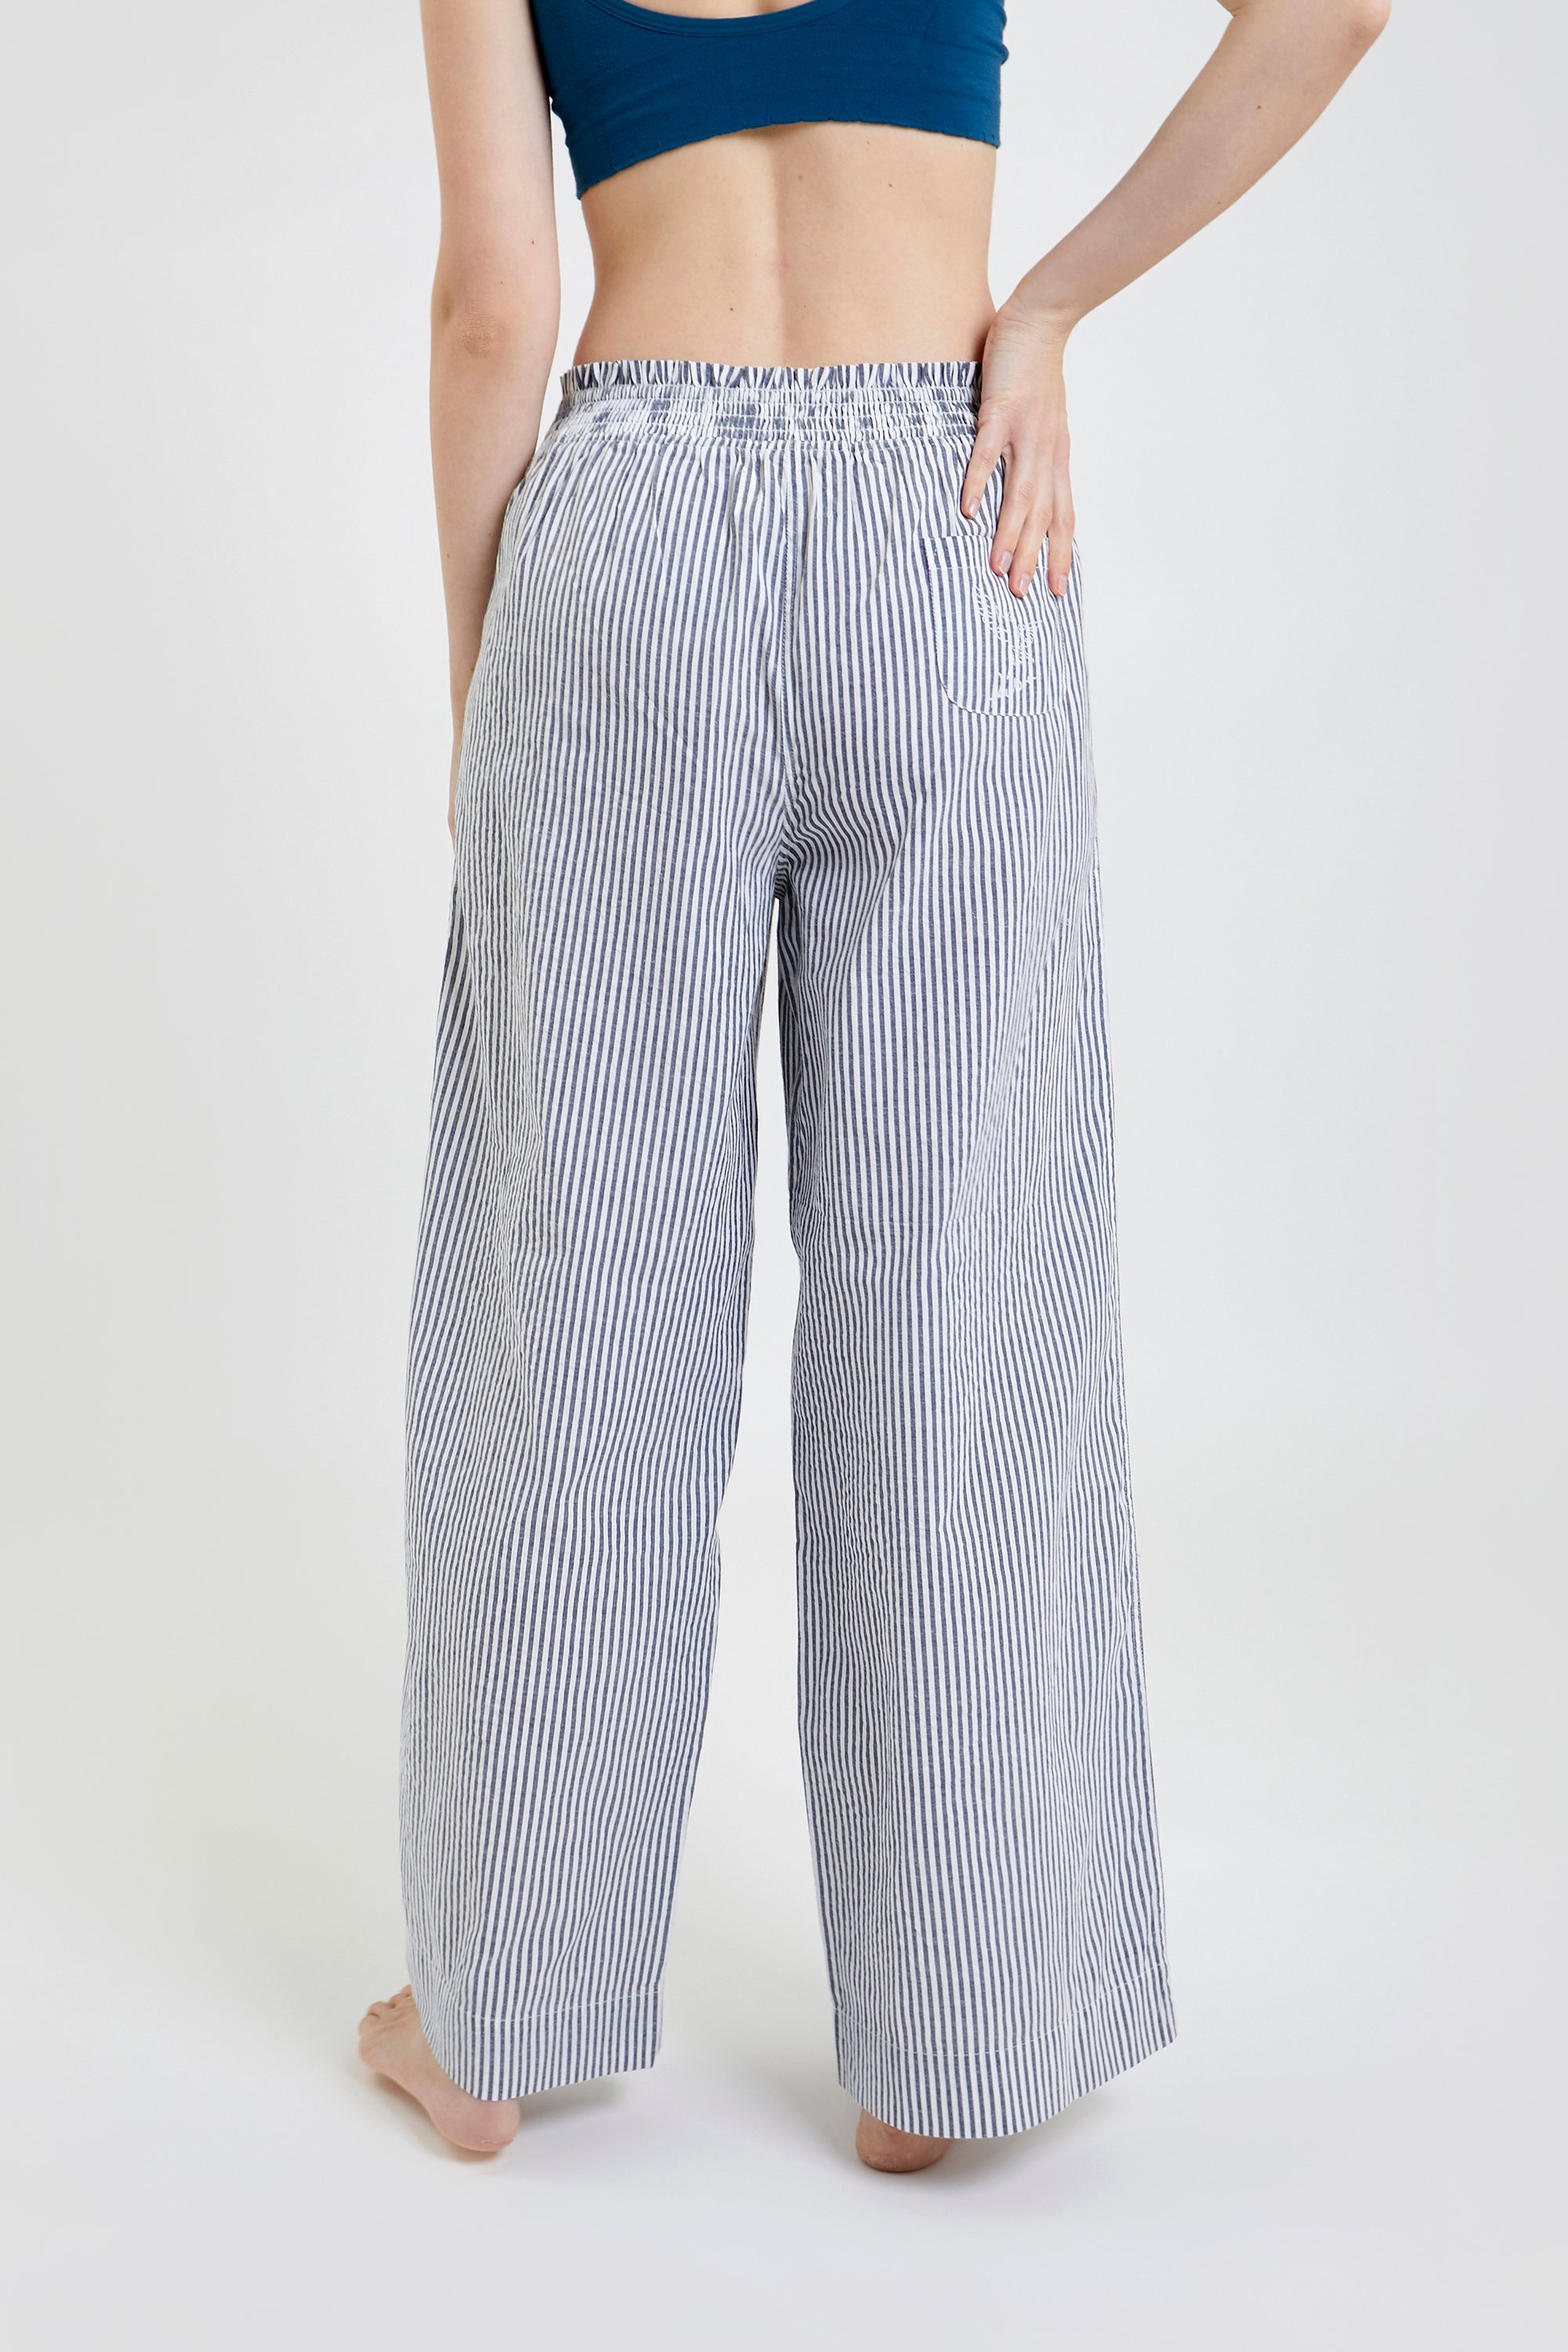 Chicory striped woven-cotton pyjama trousers - Charcoal Stripe